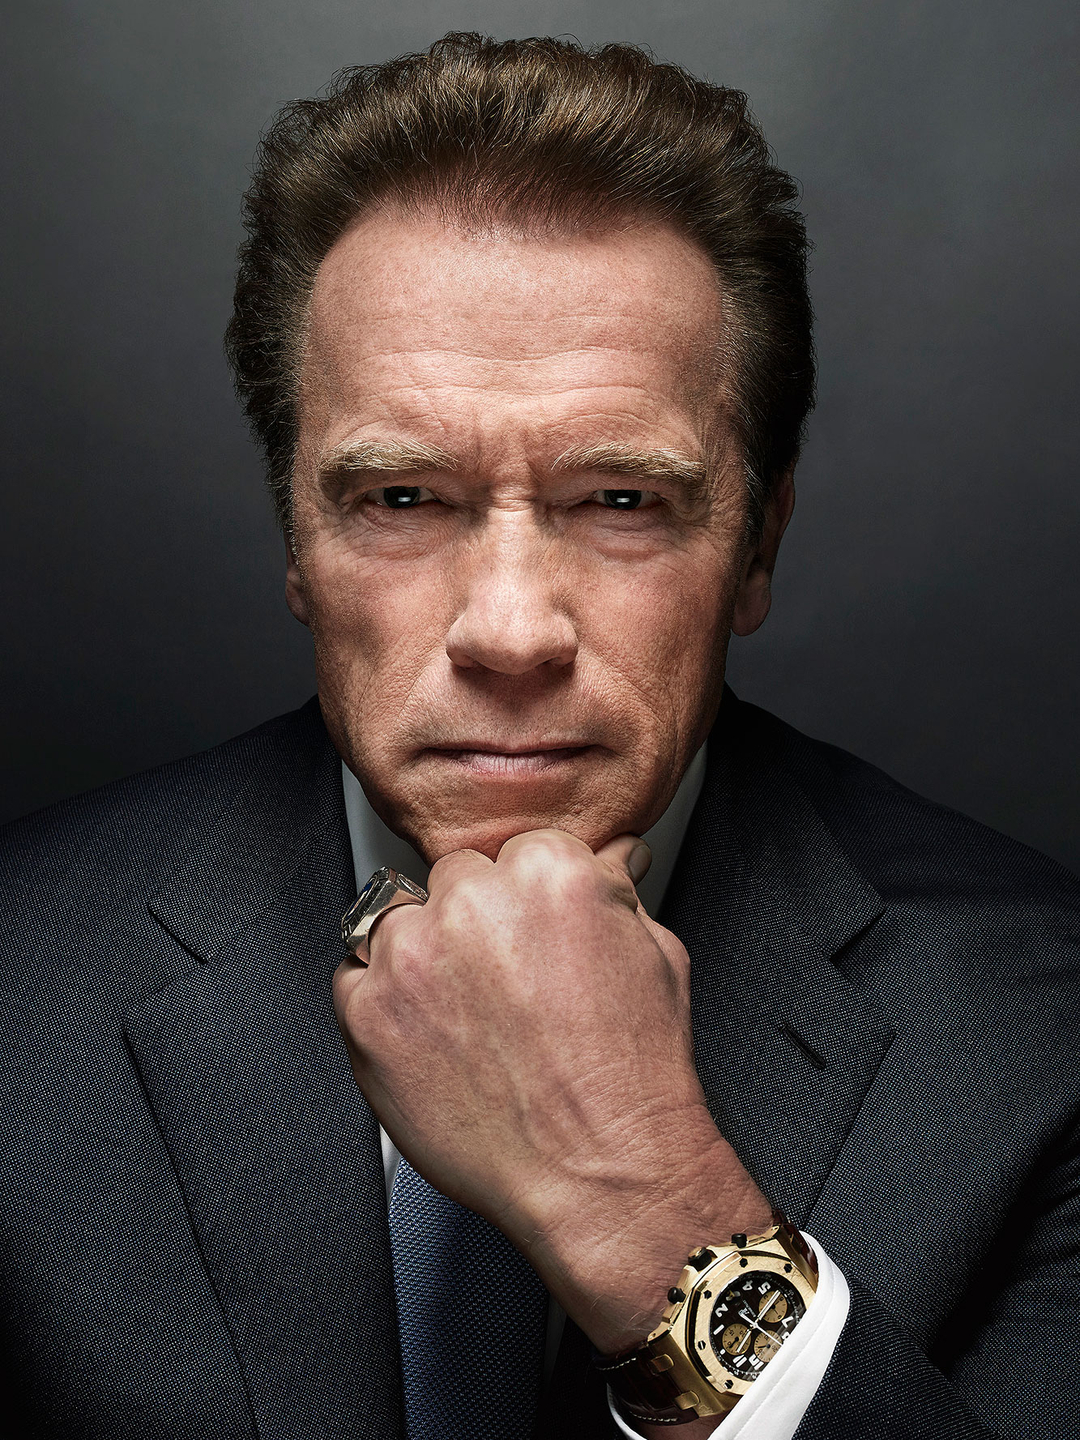 Arnold Schwarzenegger early childhood